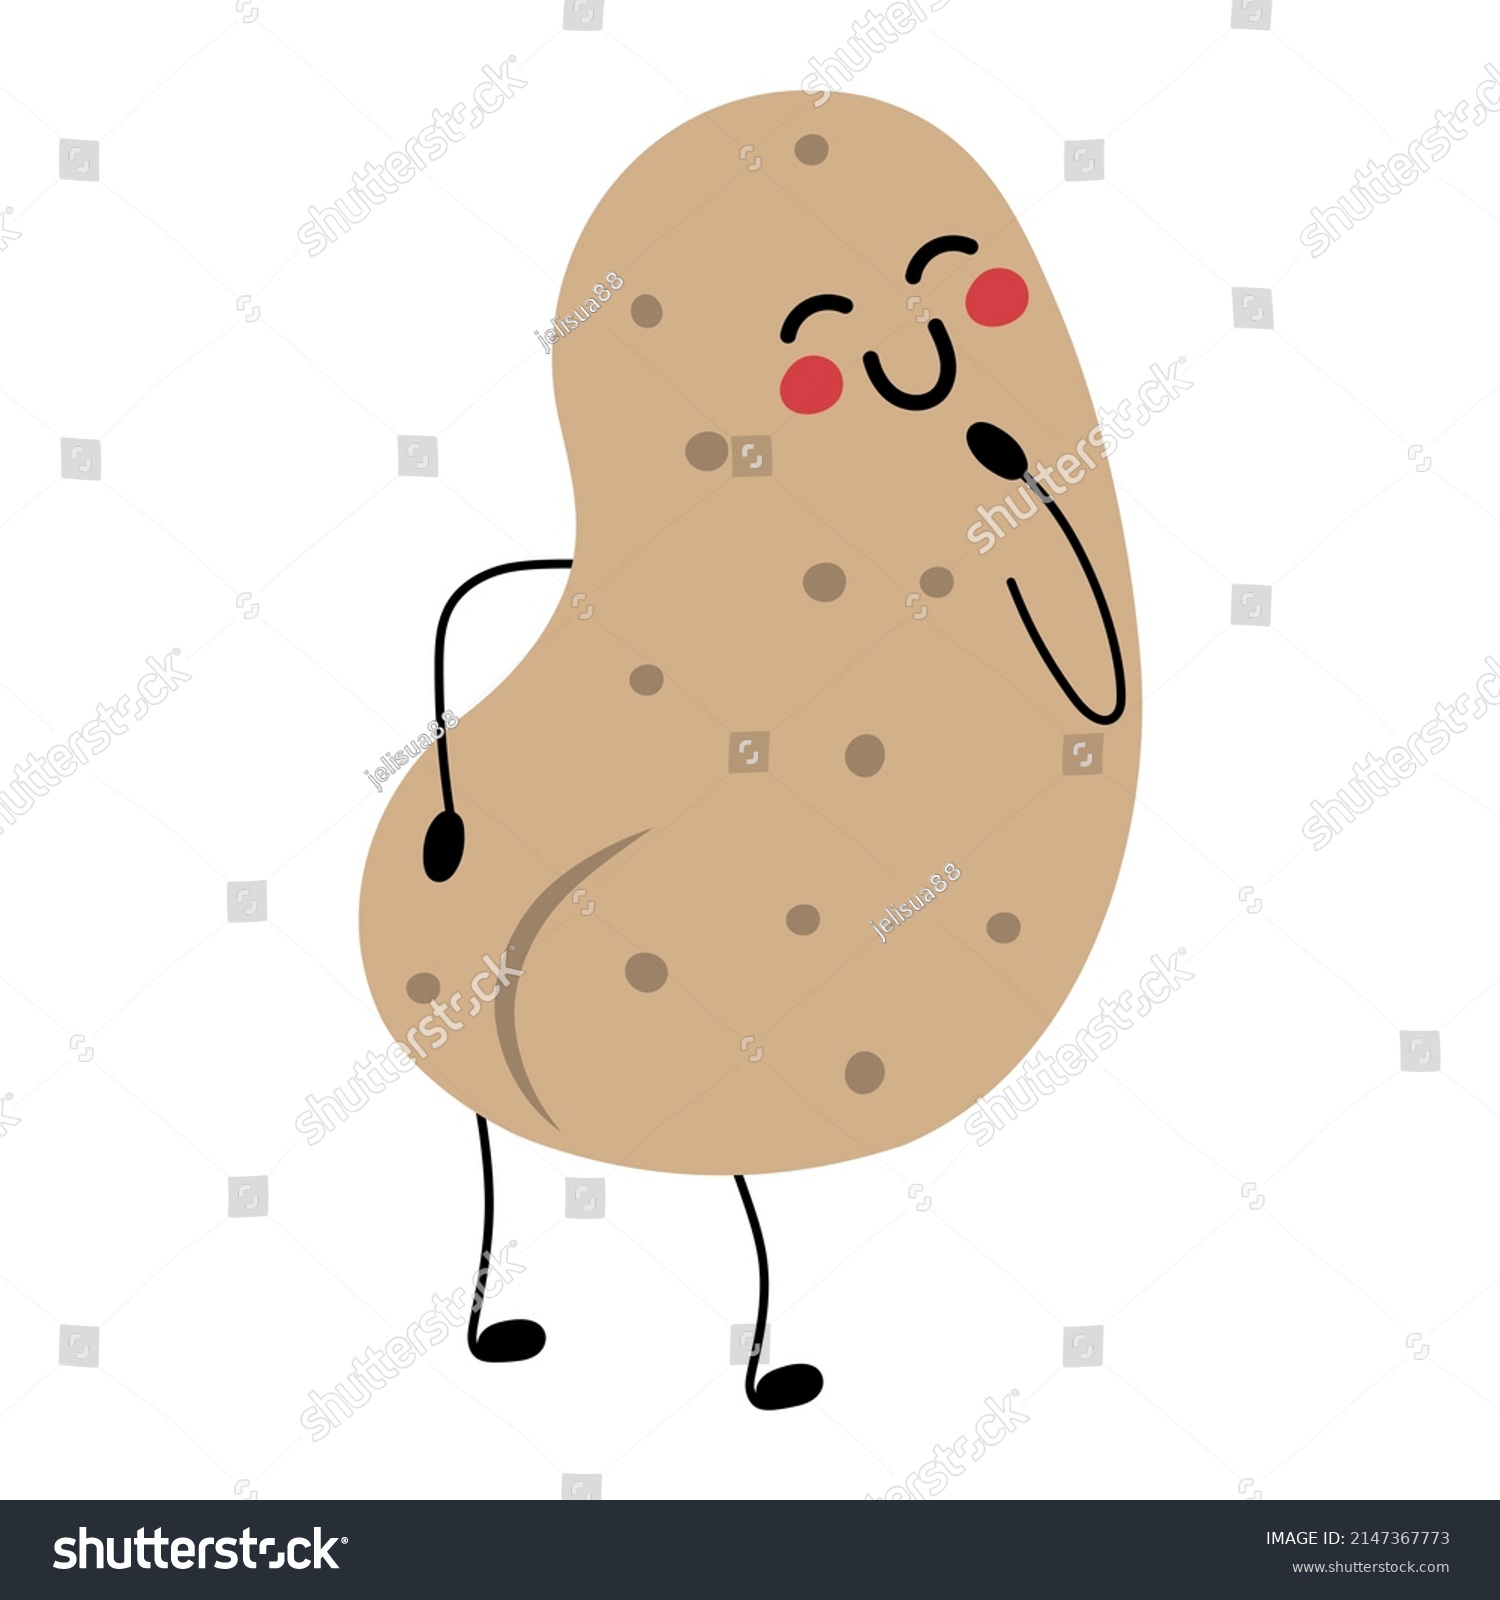 Ass pretty potatoo HOT PRETTY